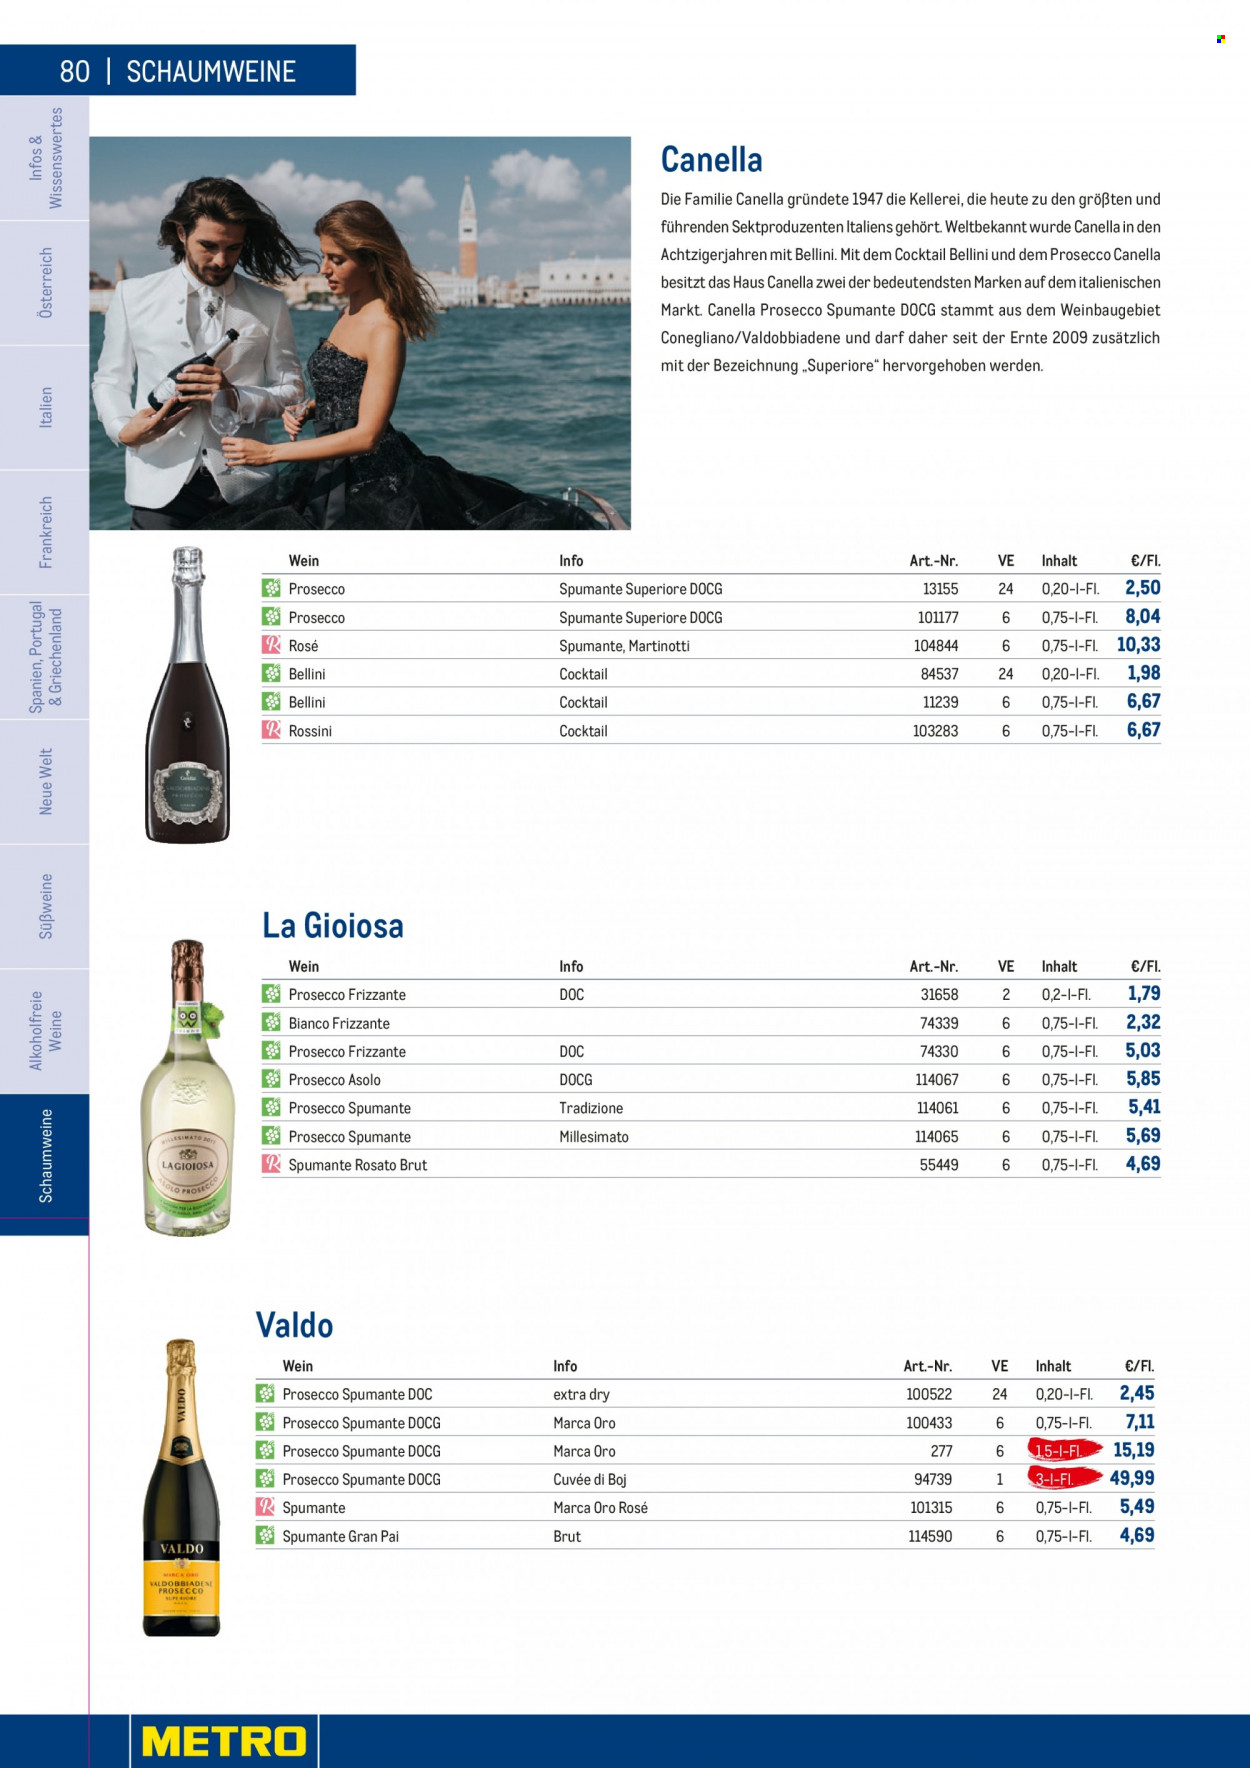 Angebote Metro - 7.9.2022 - 30.4.2023 - Verkaufsprodukte - Wein, Vino Spumante, Prosecco, Alkohol, Frizzante, Valdo, La Gioiosa, Valdobbiadene. Seite 80.